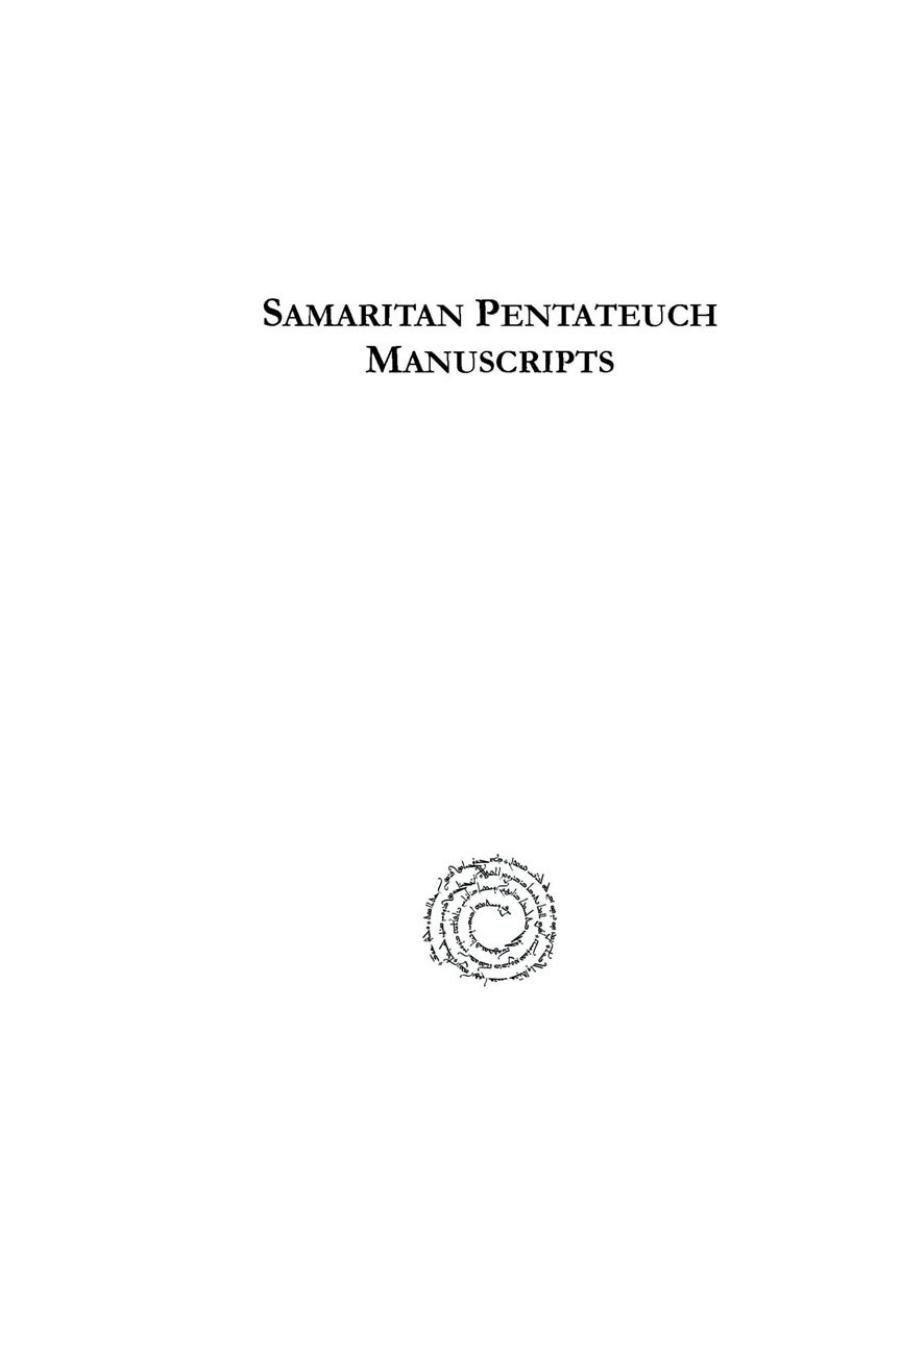 Samaritan Pentateuch Manuscripts by W. (William) Watson